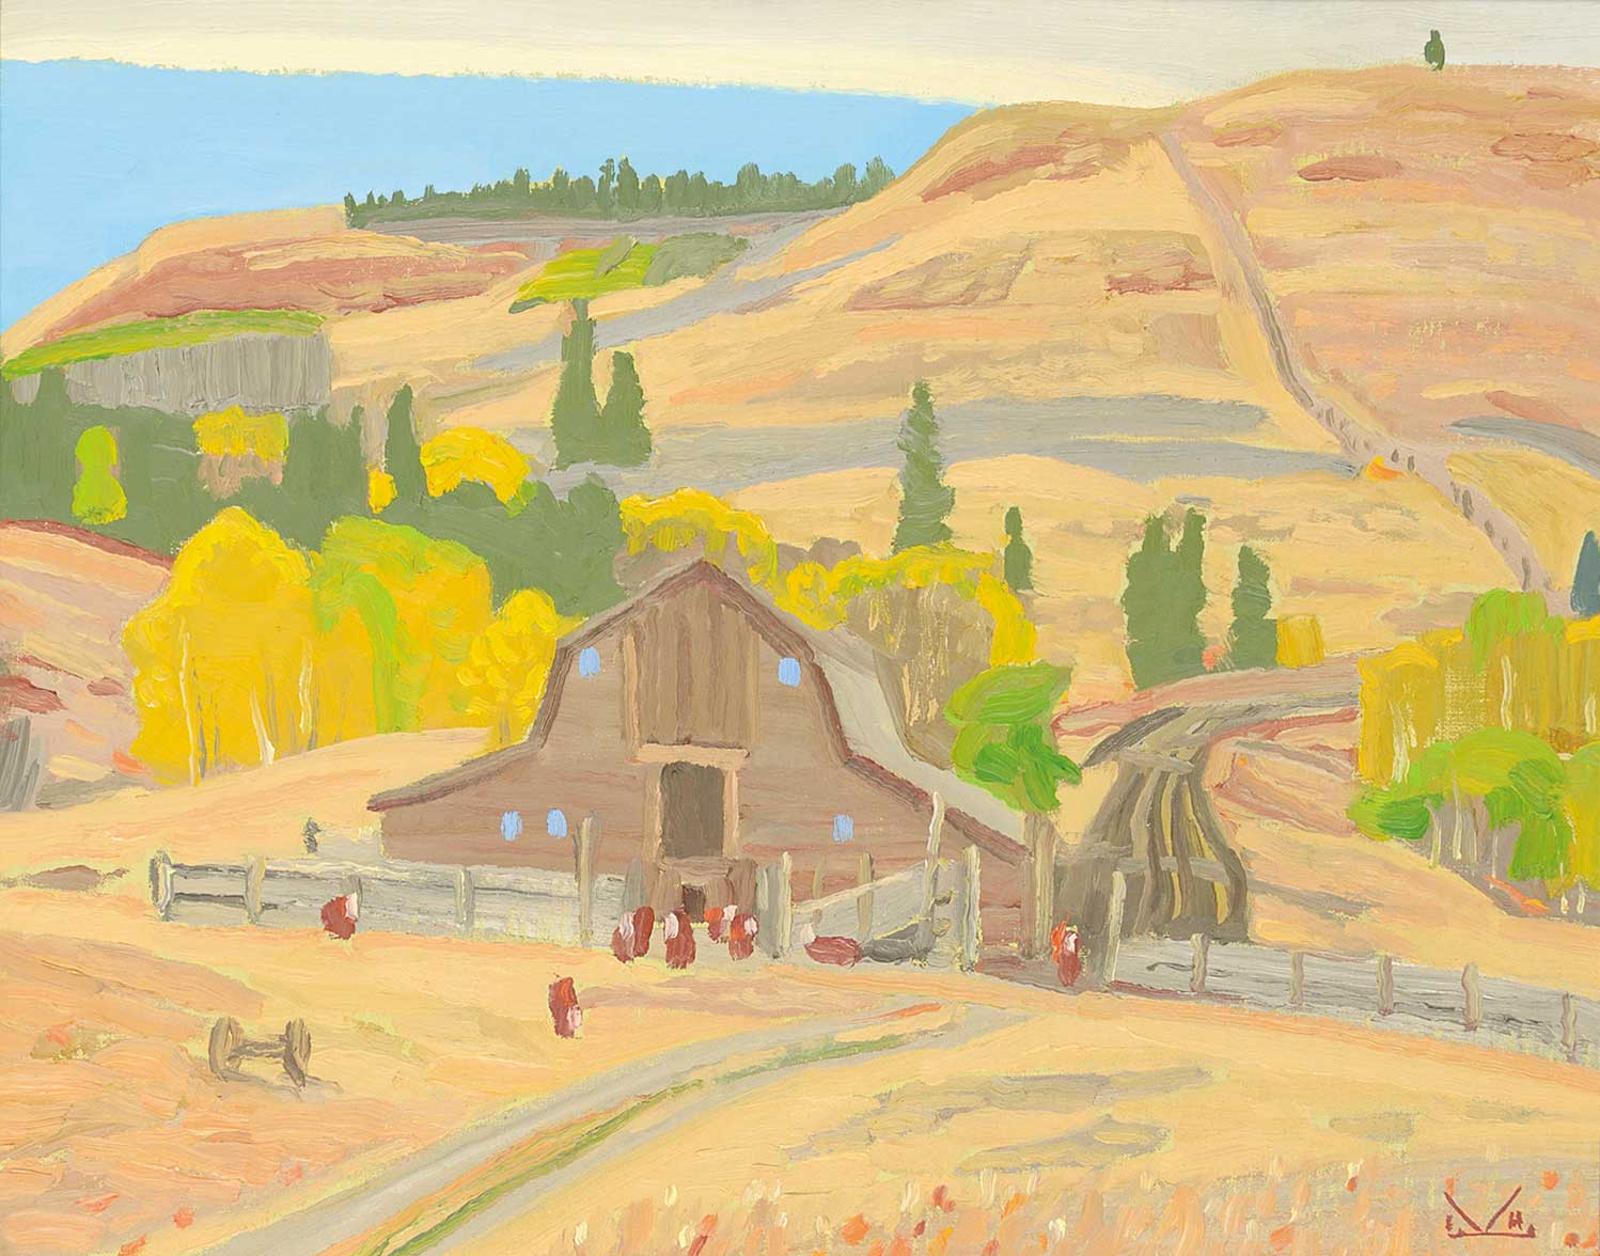 Illingworth Holey (Buck) Kerr (1905-1989) - The Porcupine Hills  #3